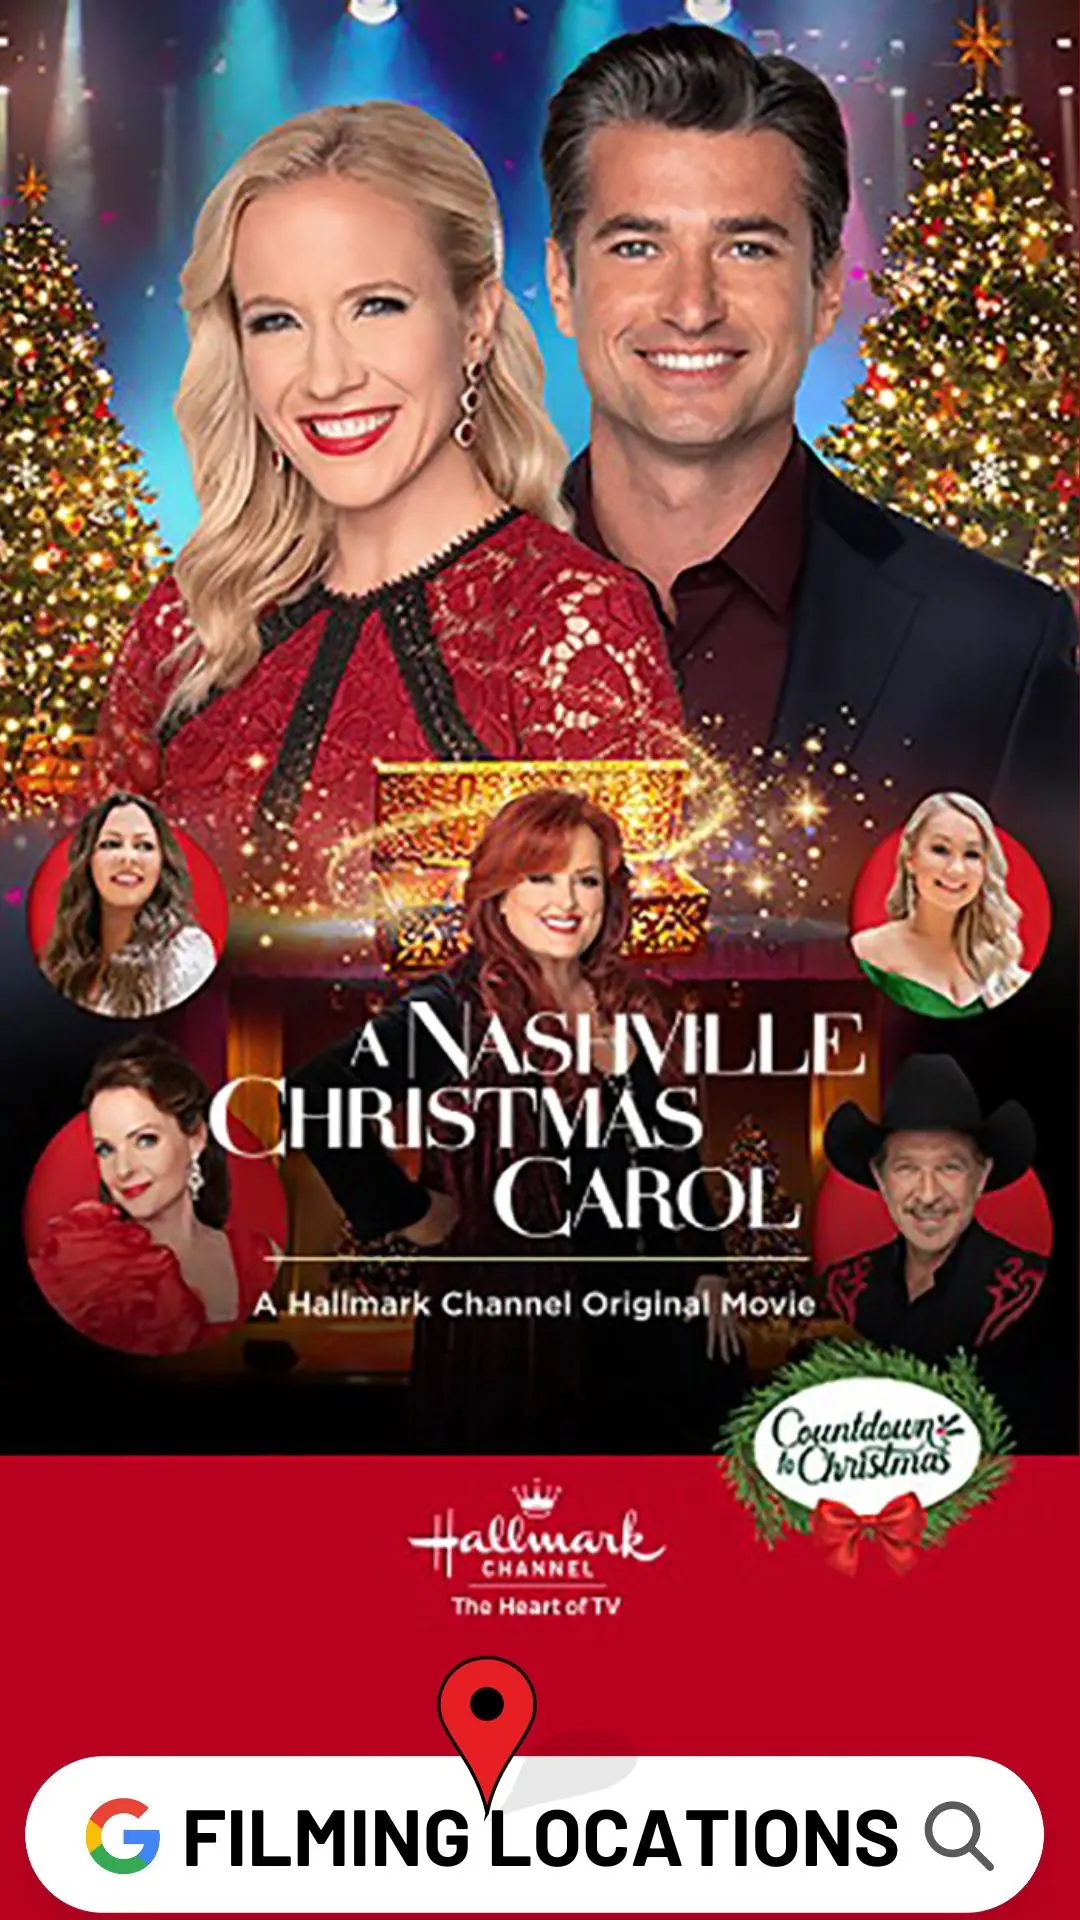 A Nashville Christmas Carol Filming Locations